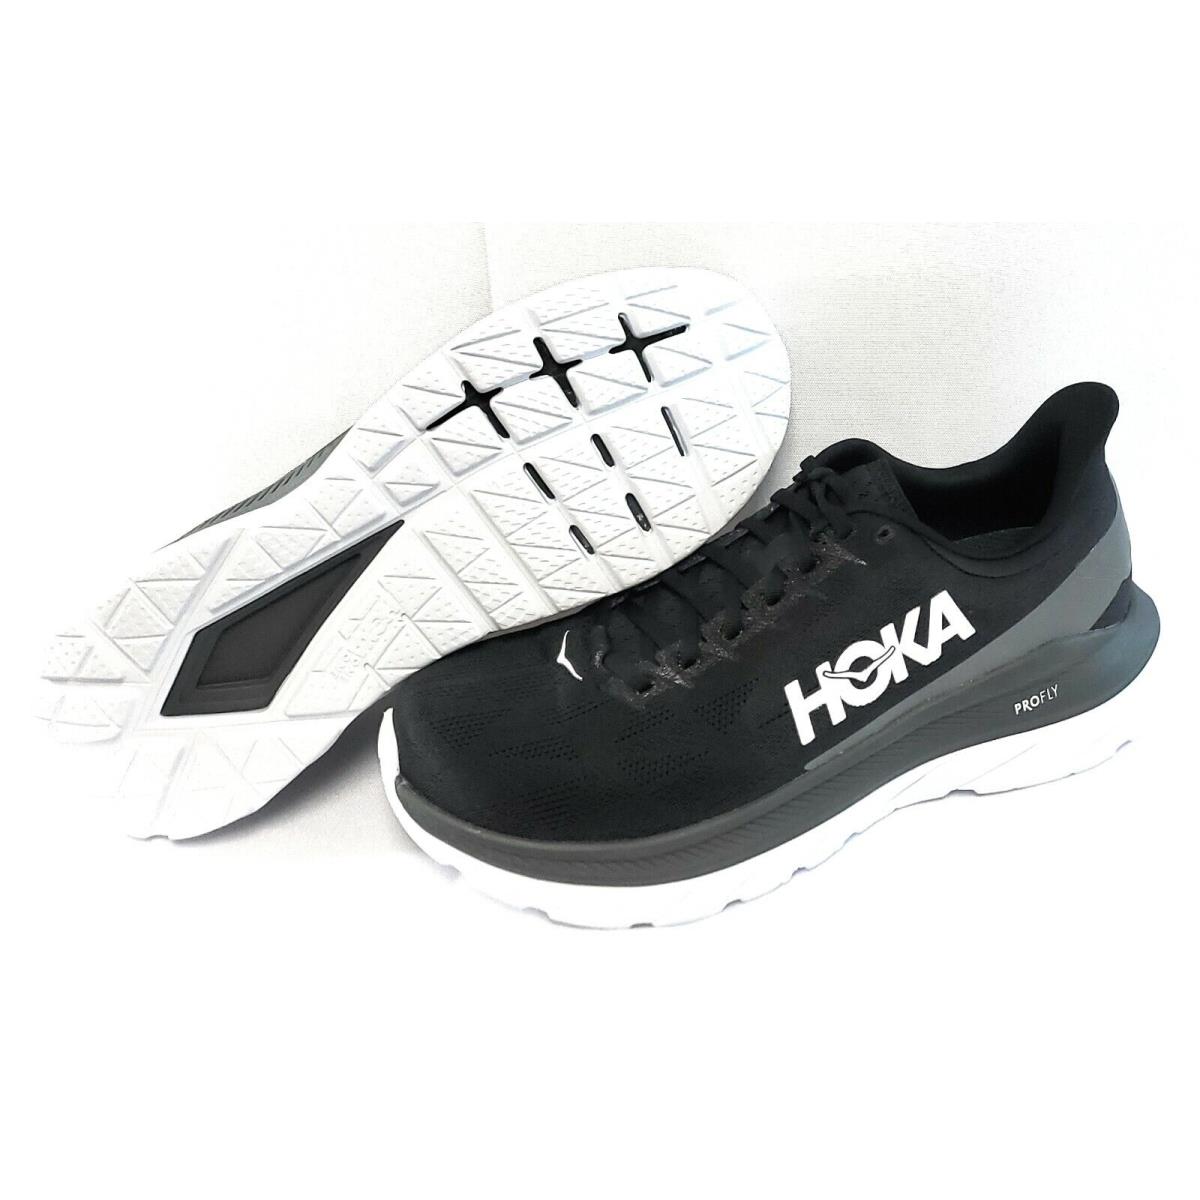 Womens Hoka One One Mach 4 1113529 Bdsd Black White Running Sneakers Shoes